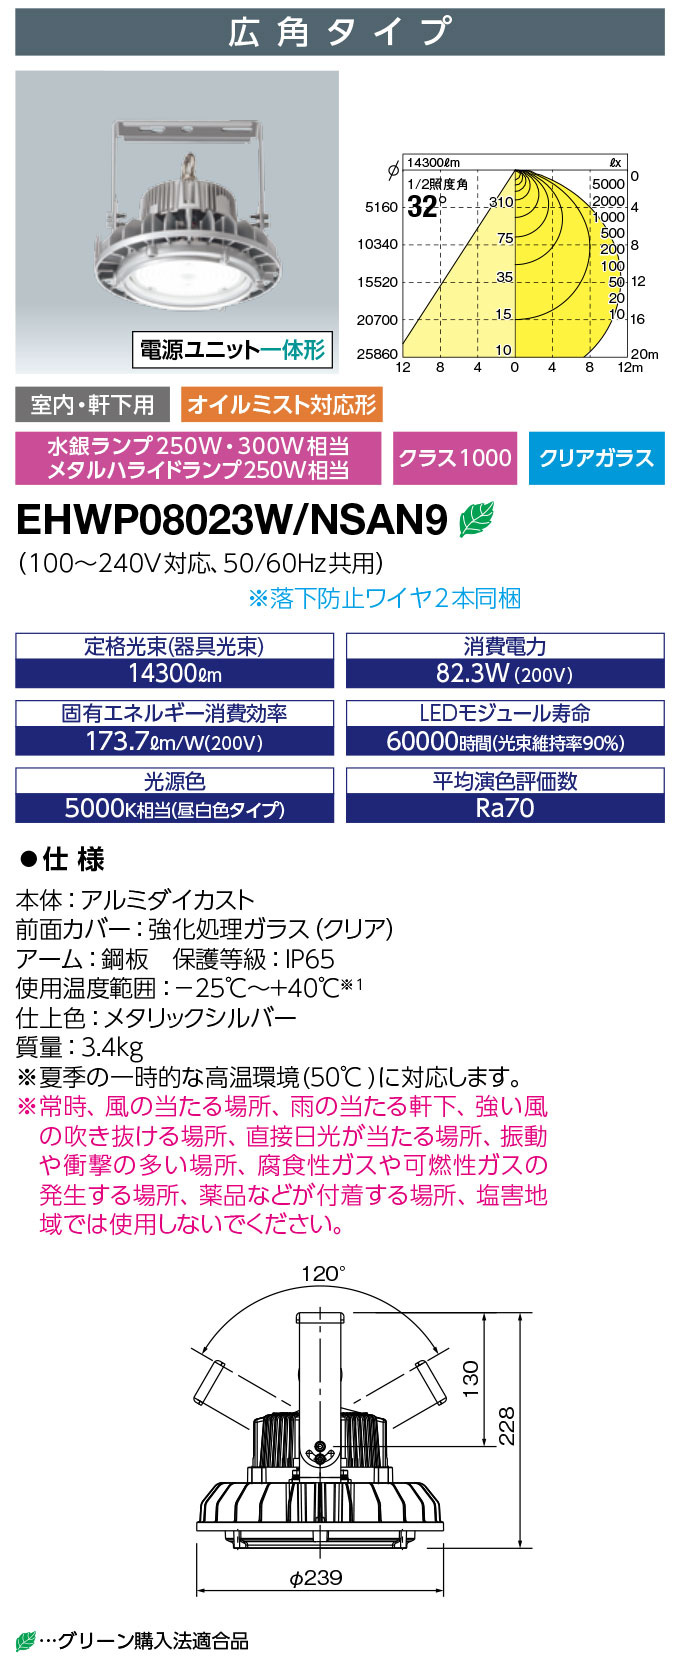 EHWP08023W/NSAN9